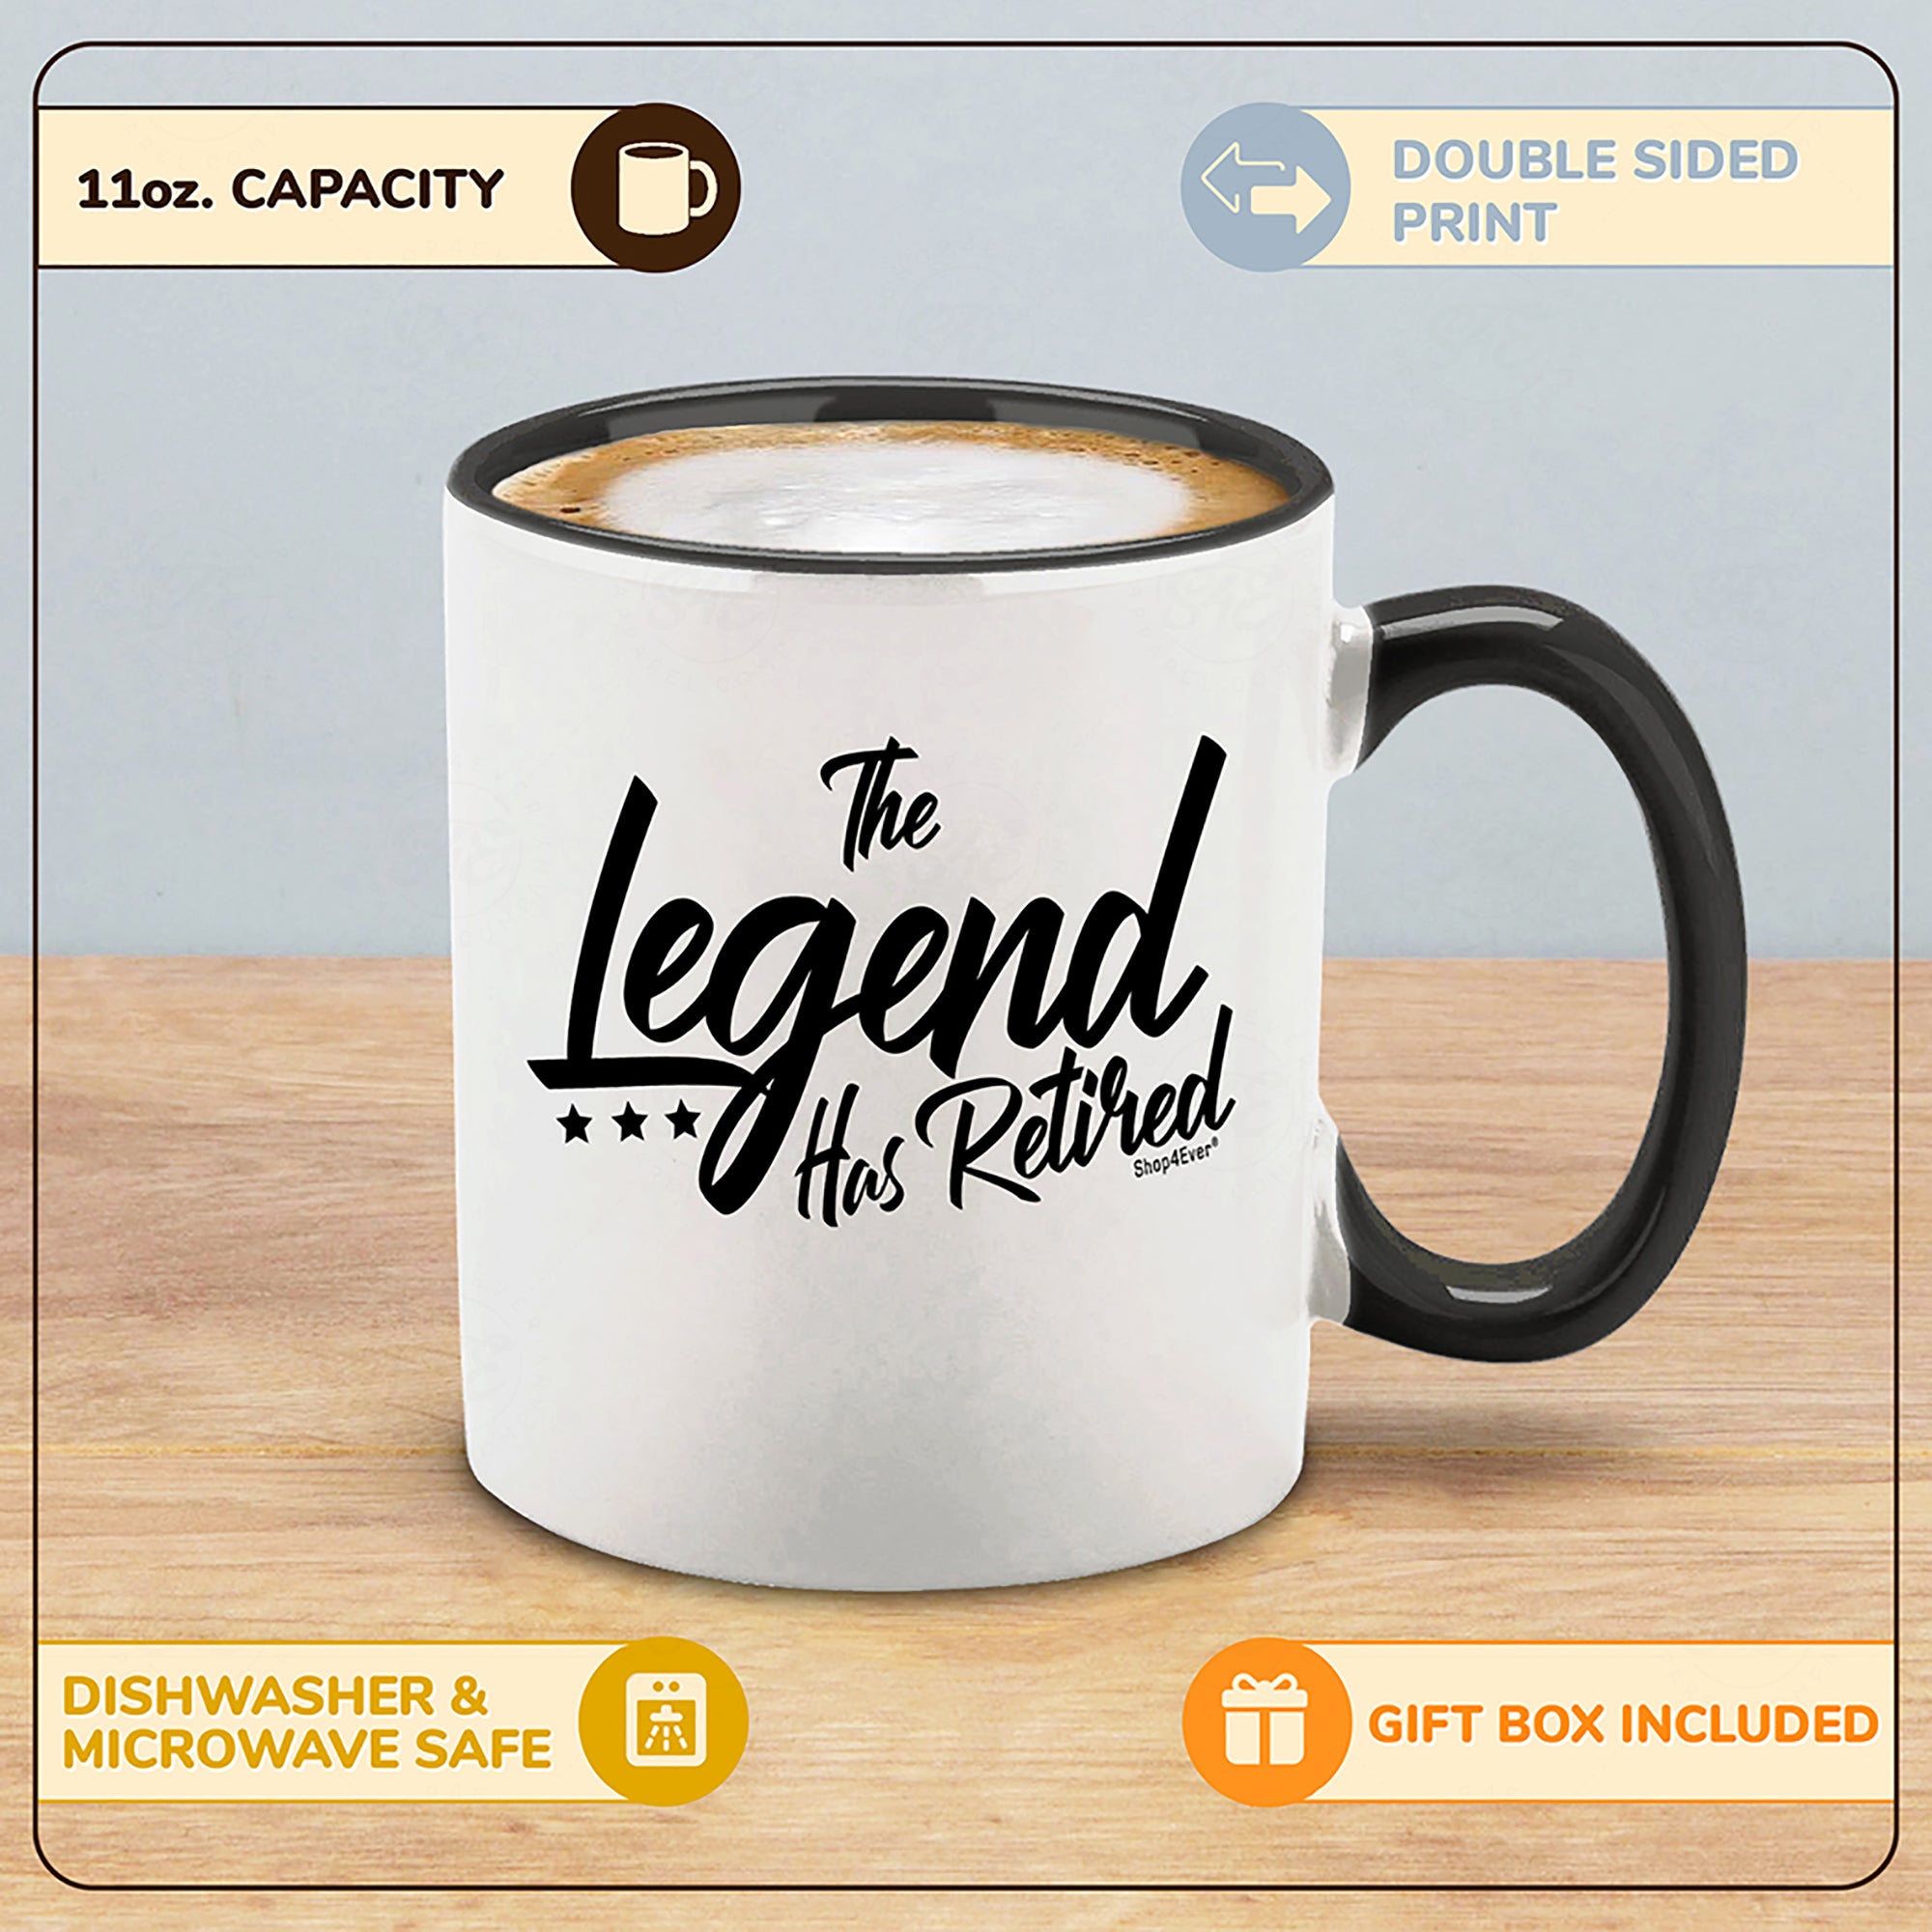 The Legend Has Retired Black Handle Ceramic Coffee Mug Tea Cup Funny Retirement Mug for Men Dad Grandpa Coworker